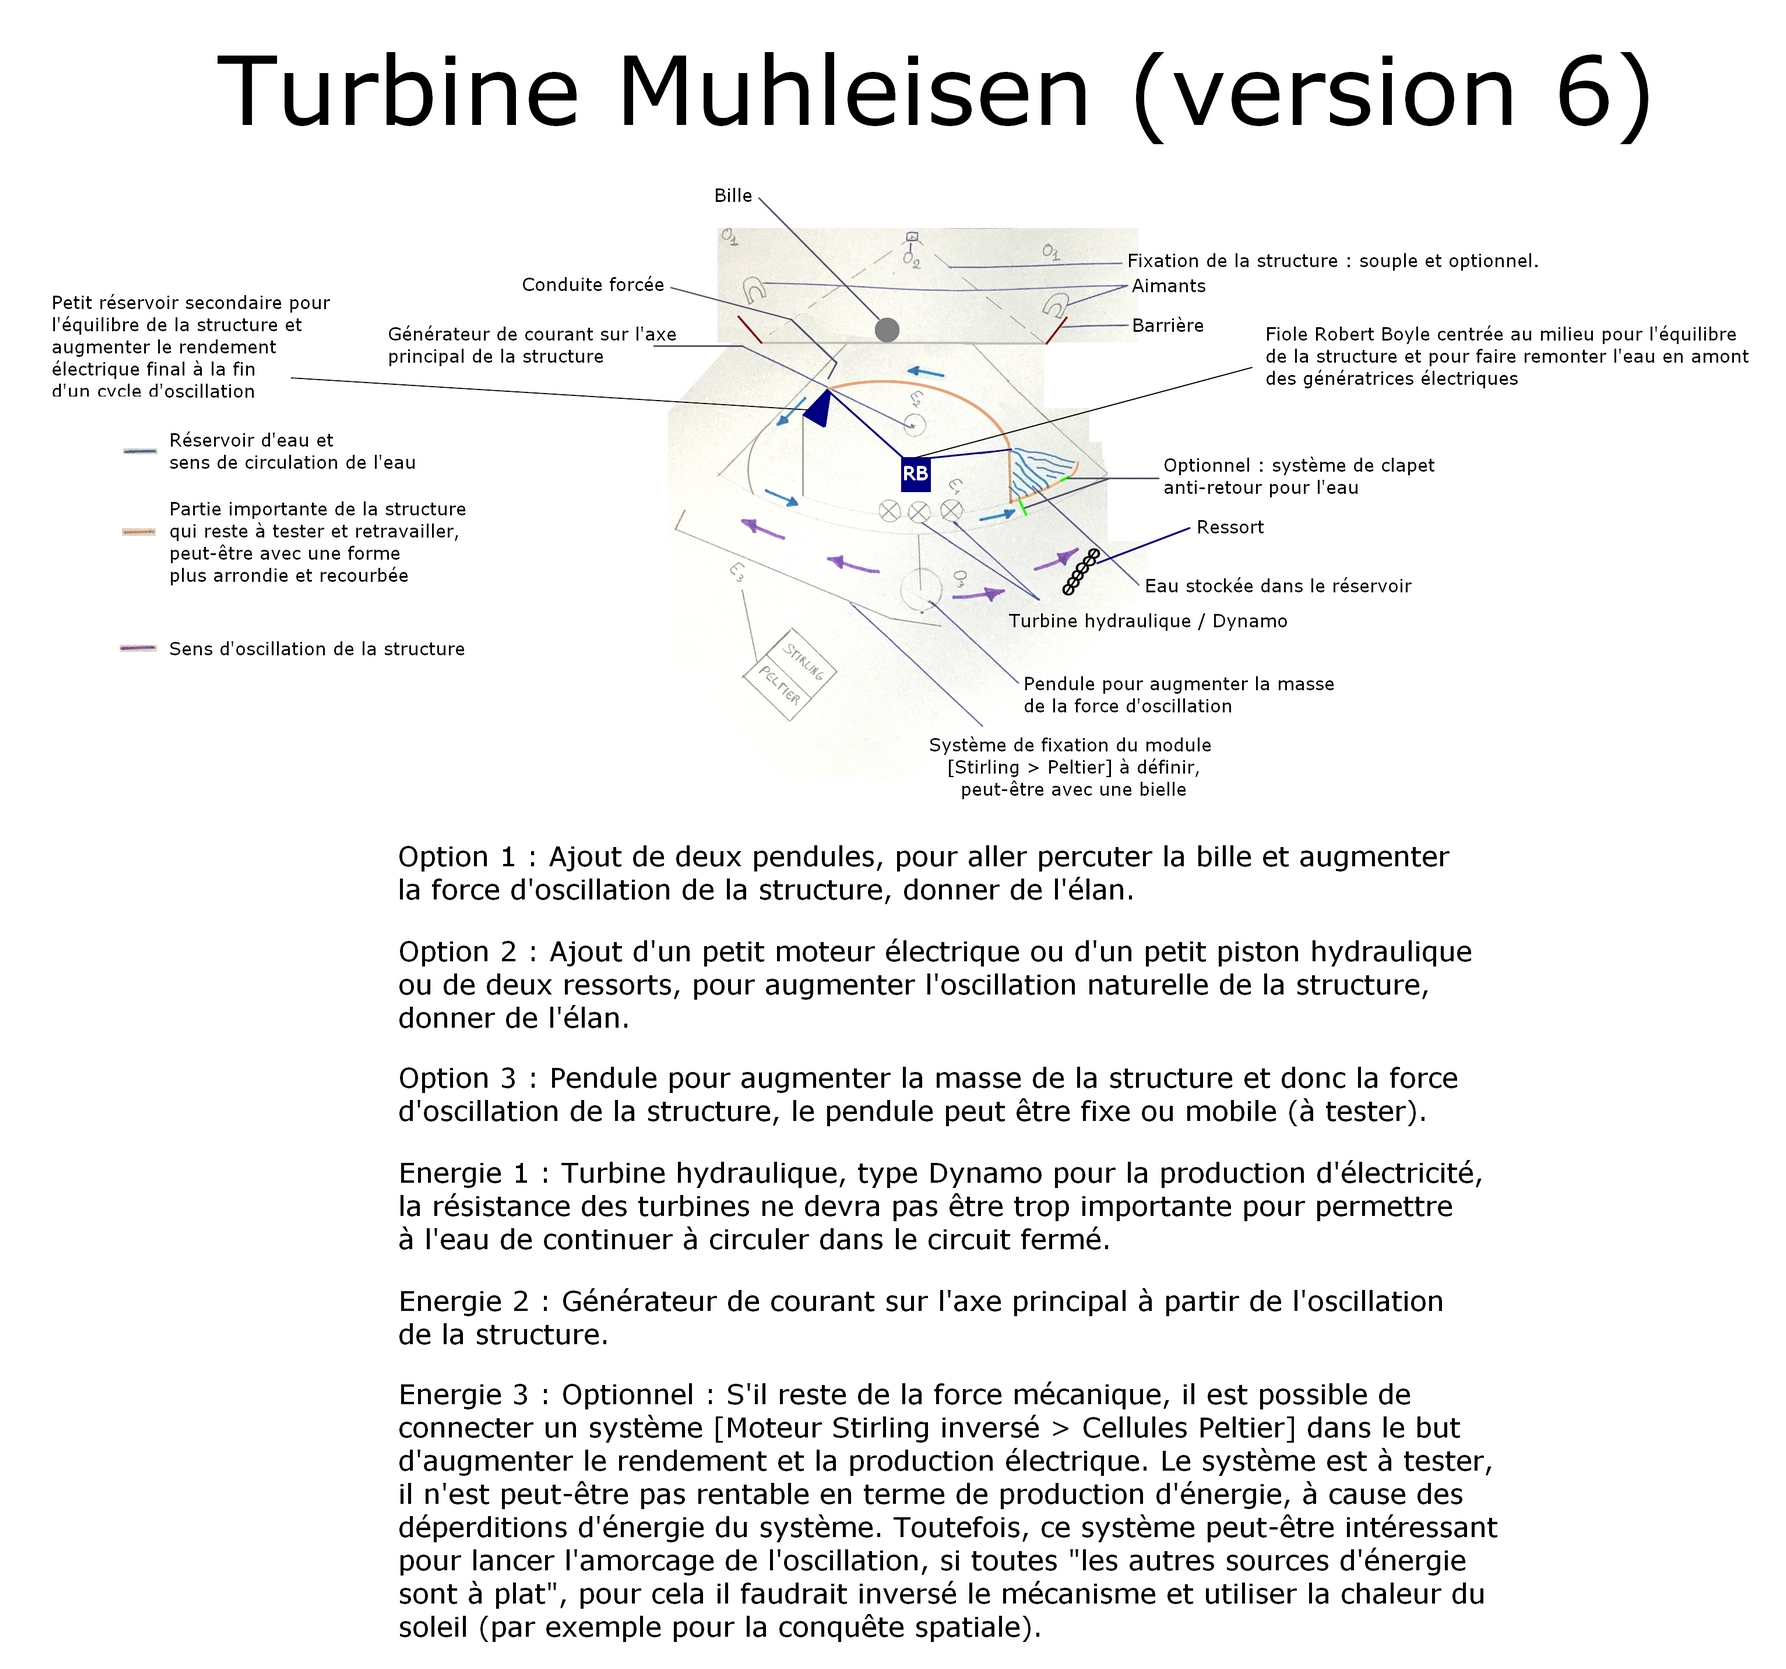 La Turbine Muhleisen 6eme version